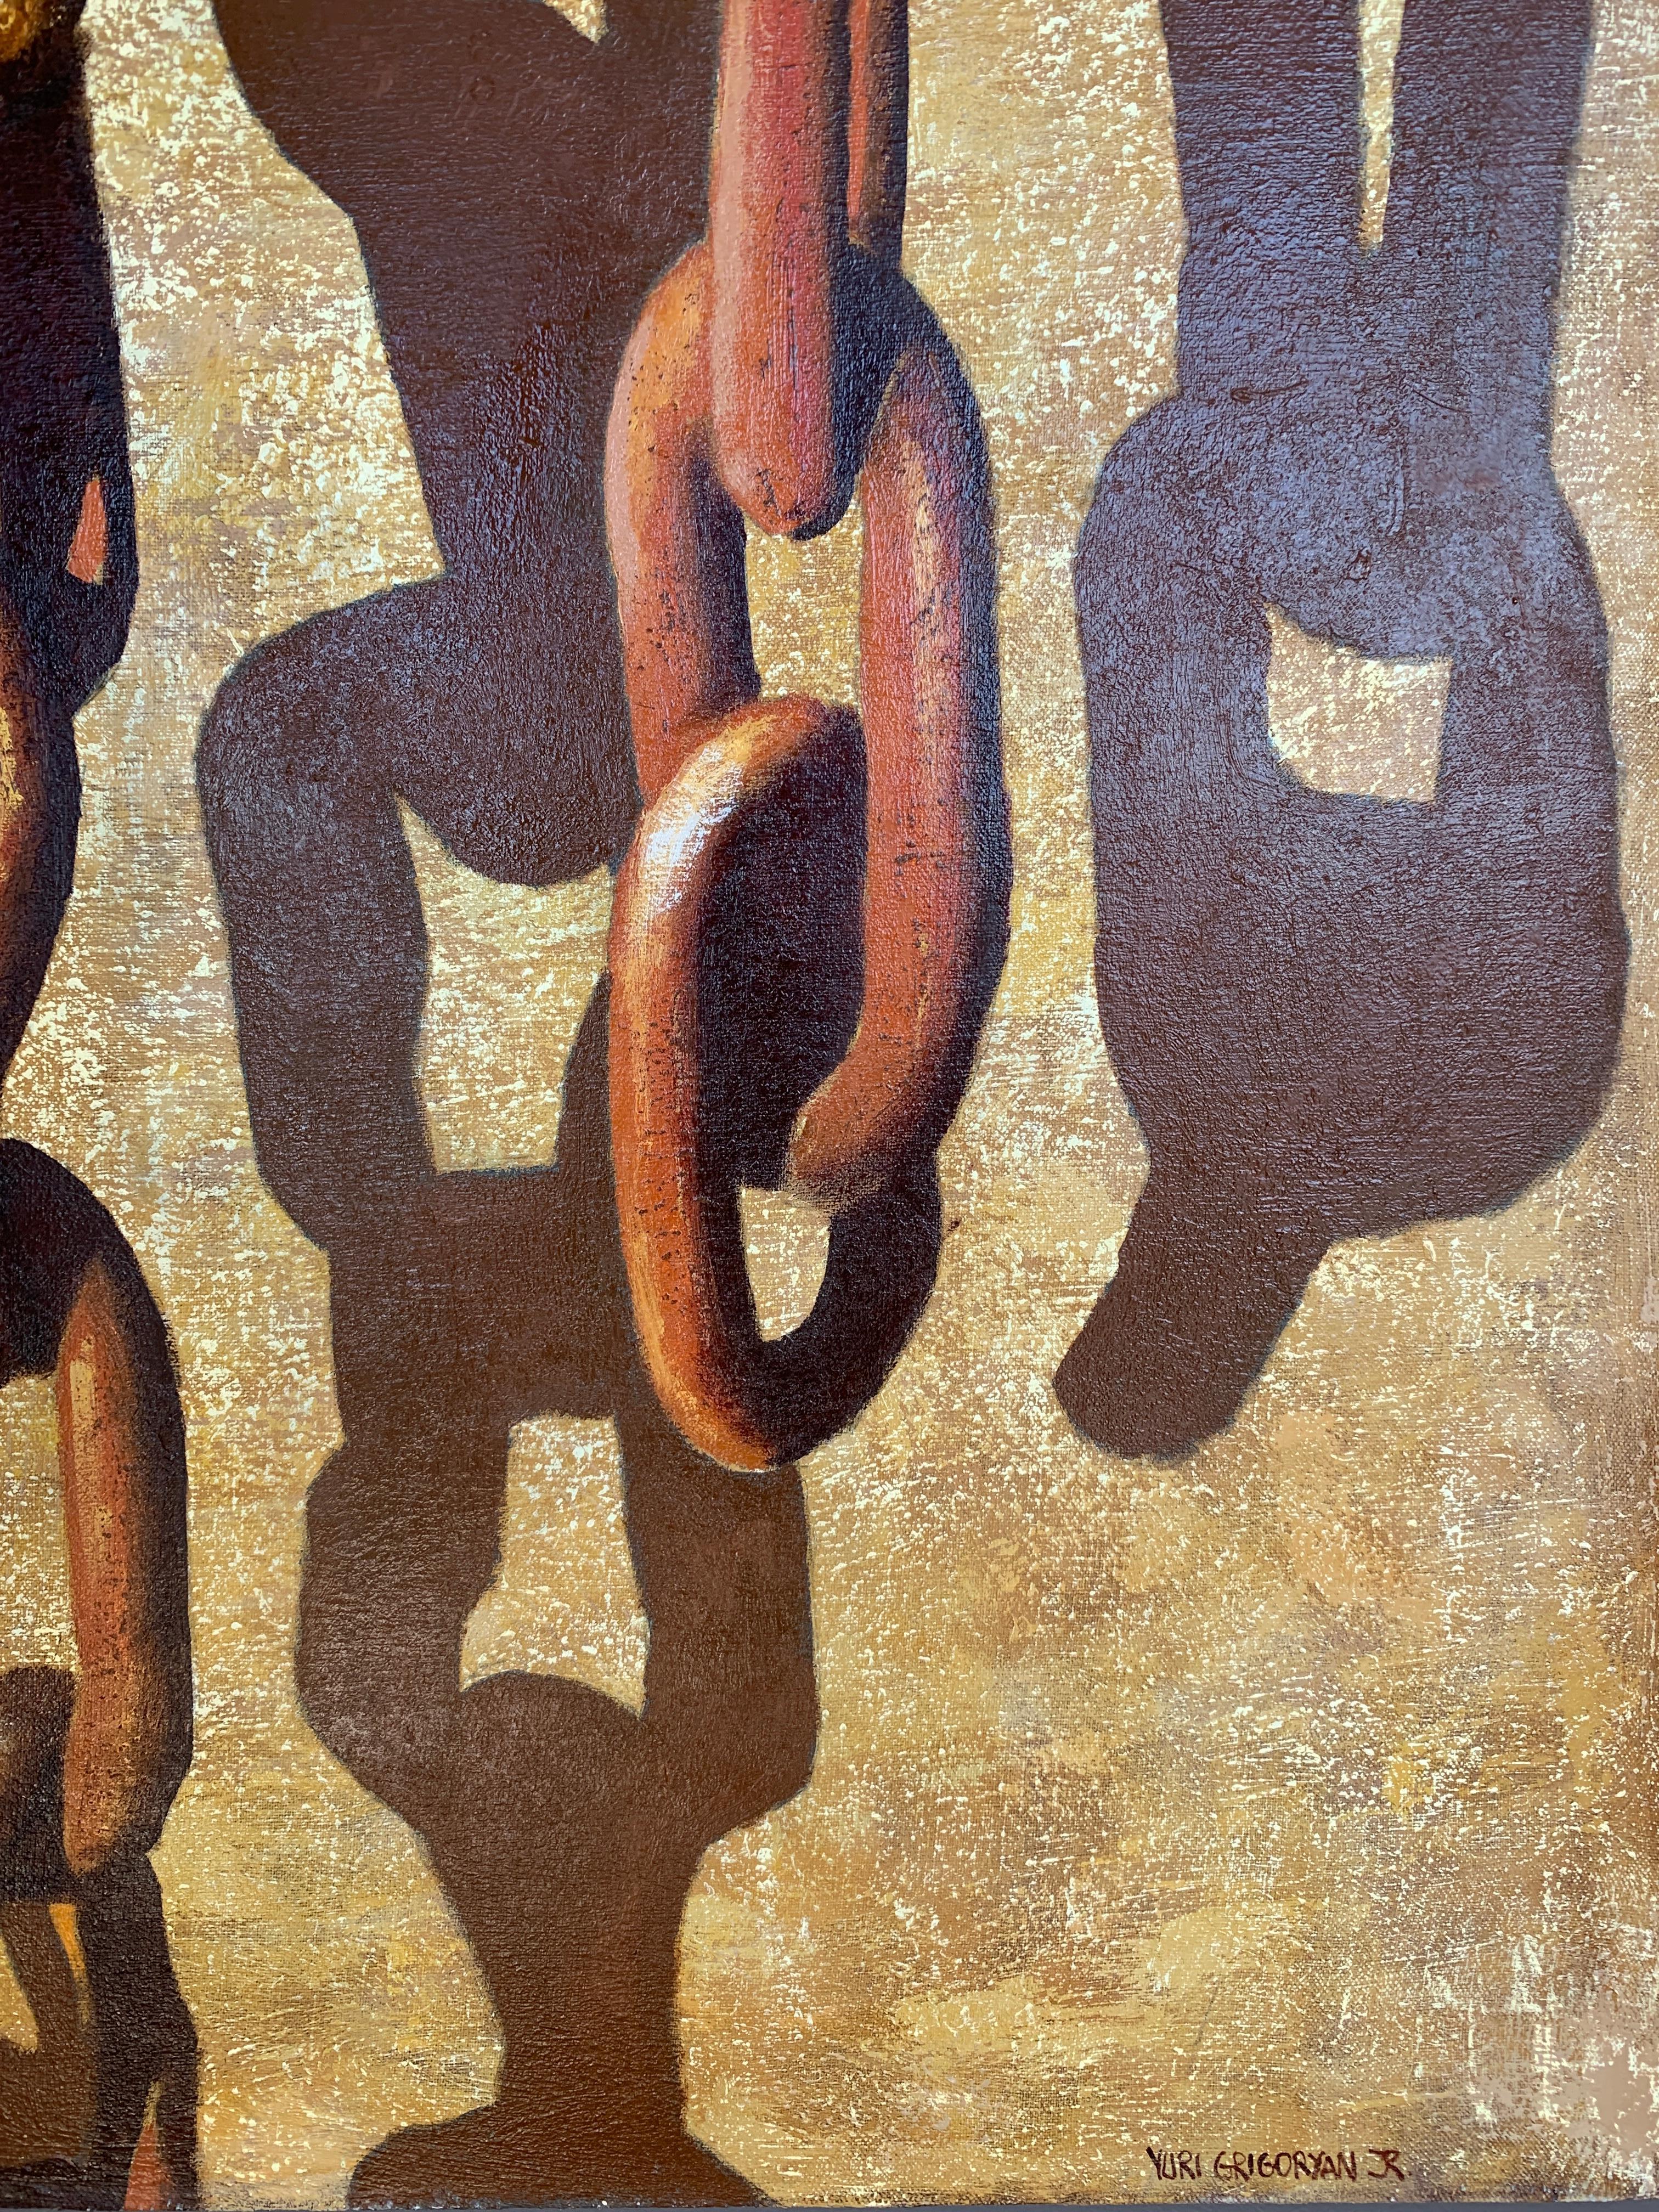 Chains 2 - Painting by Yuriy Grigoryan